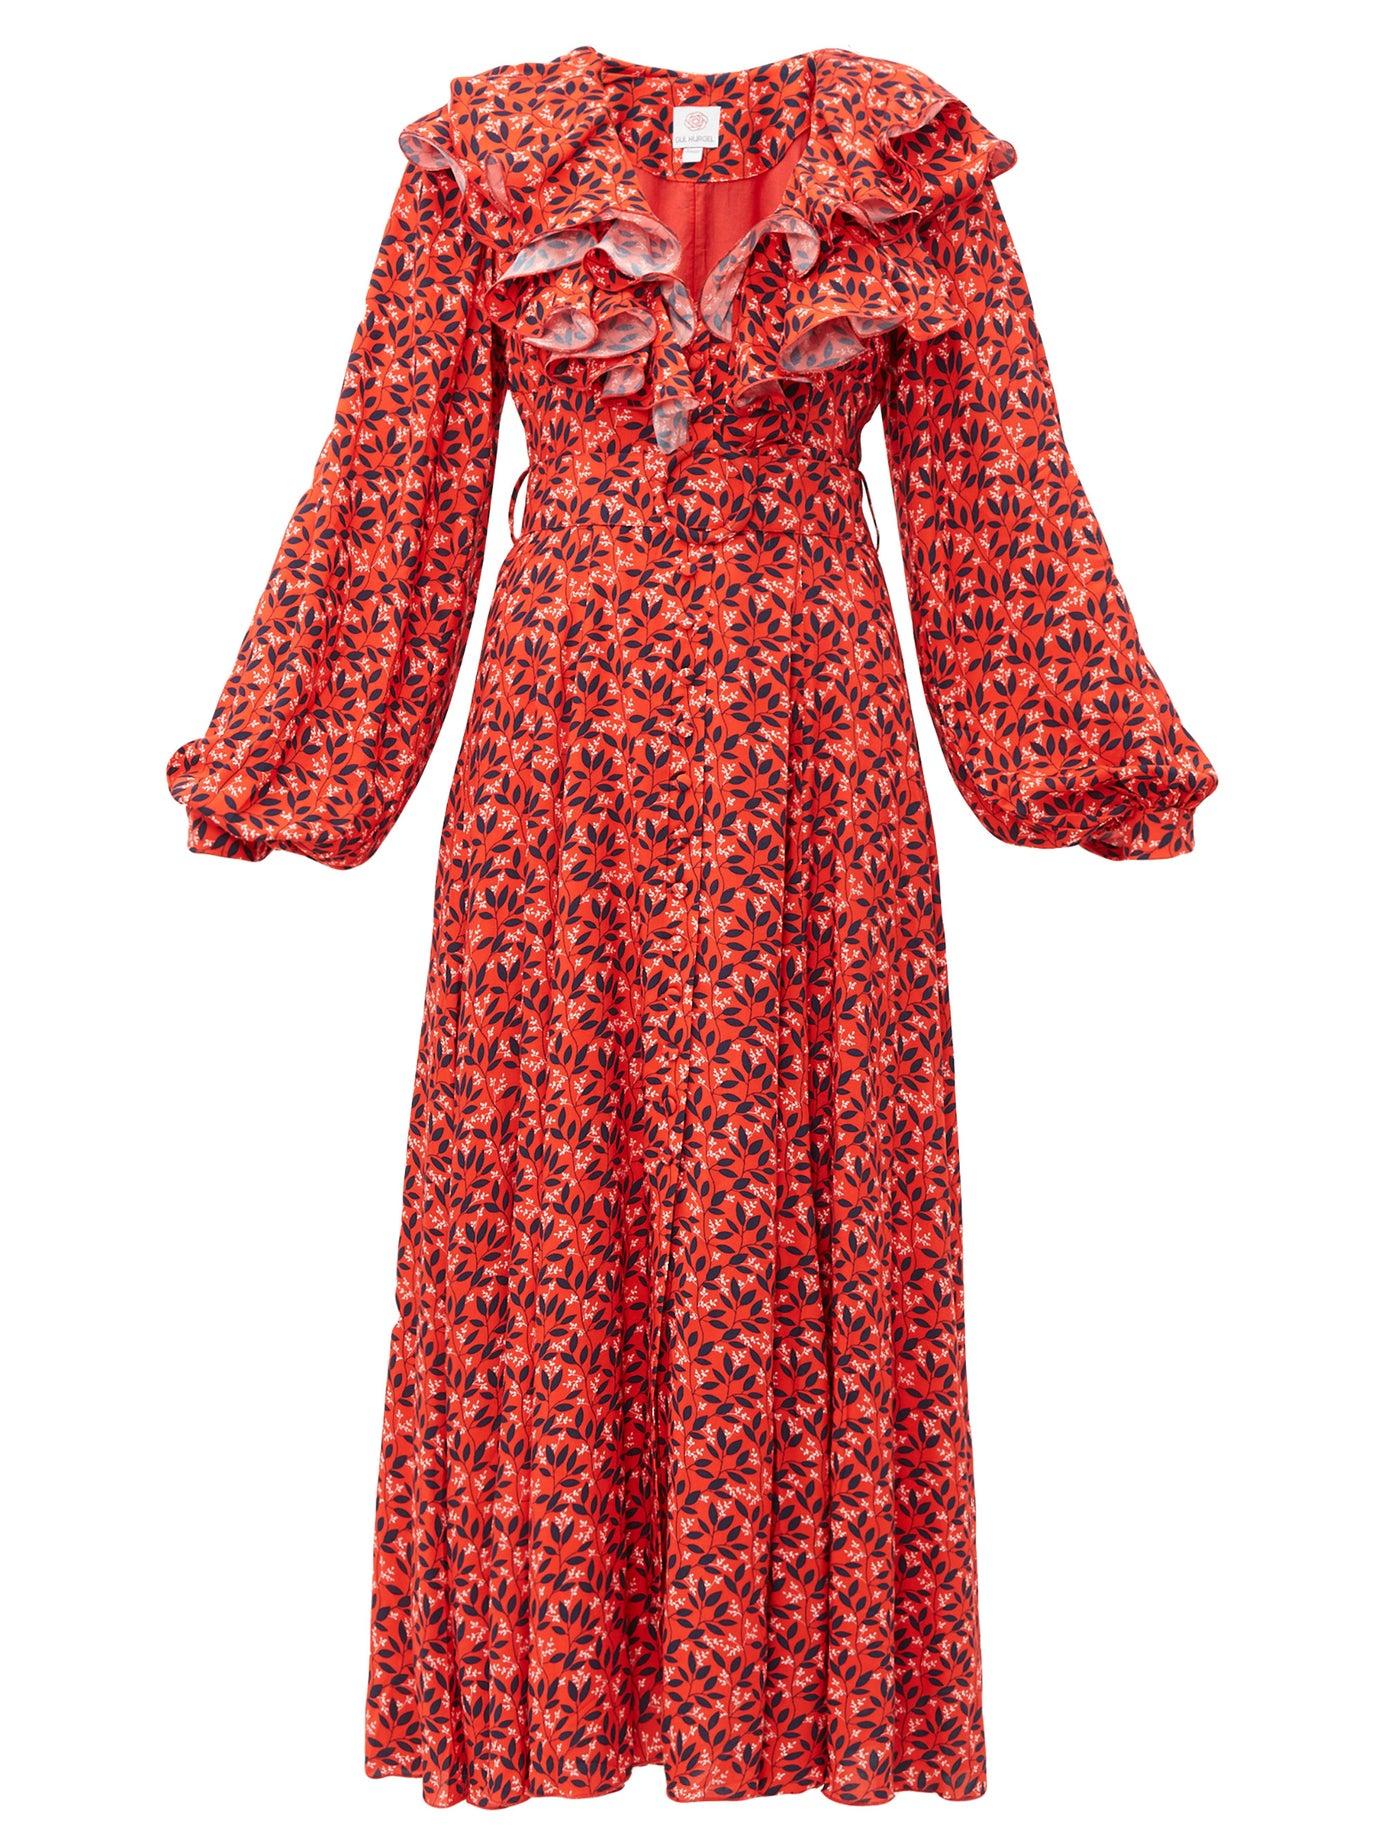 Gül Hürgel Floral Print Ruffle Trim Poplin Dress in Red - Lyst